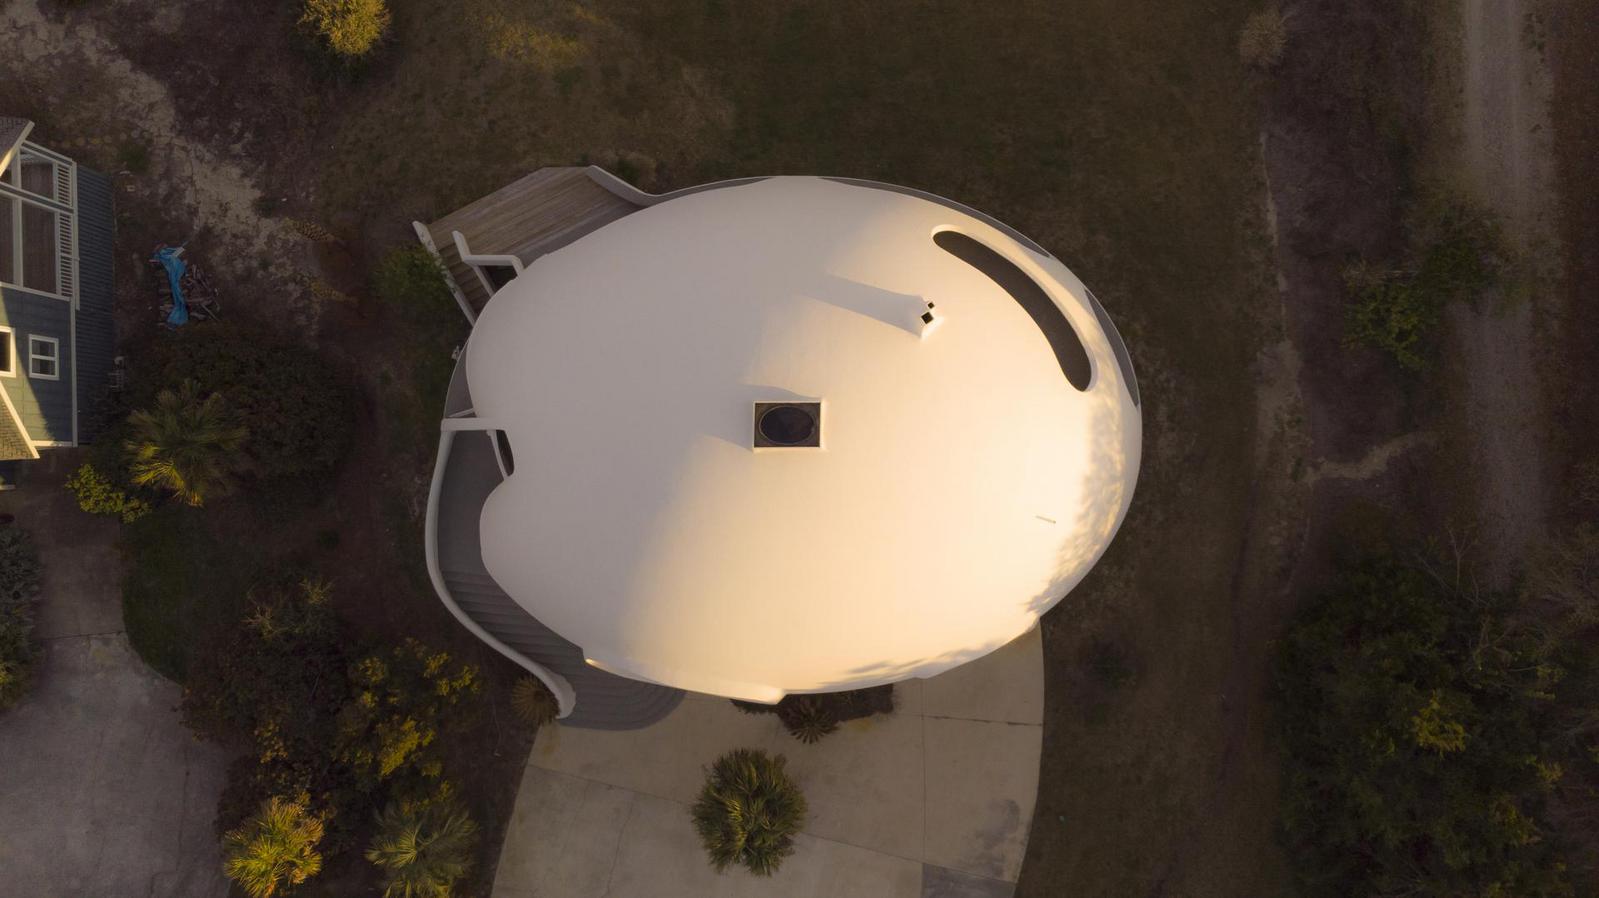 Elliptical dome shape